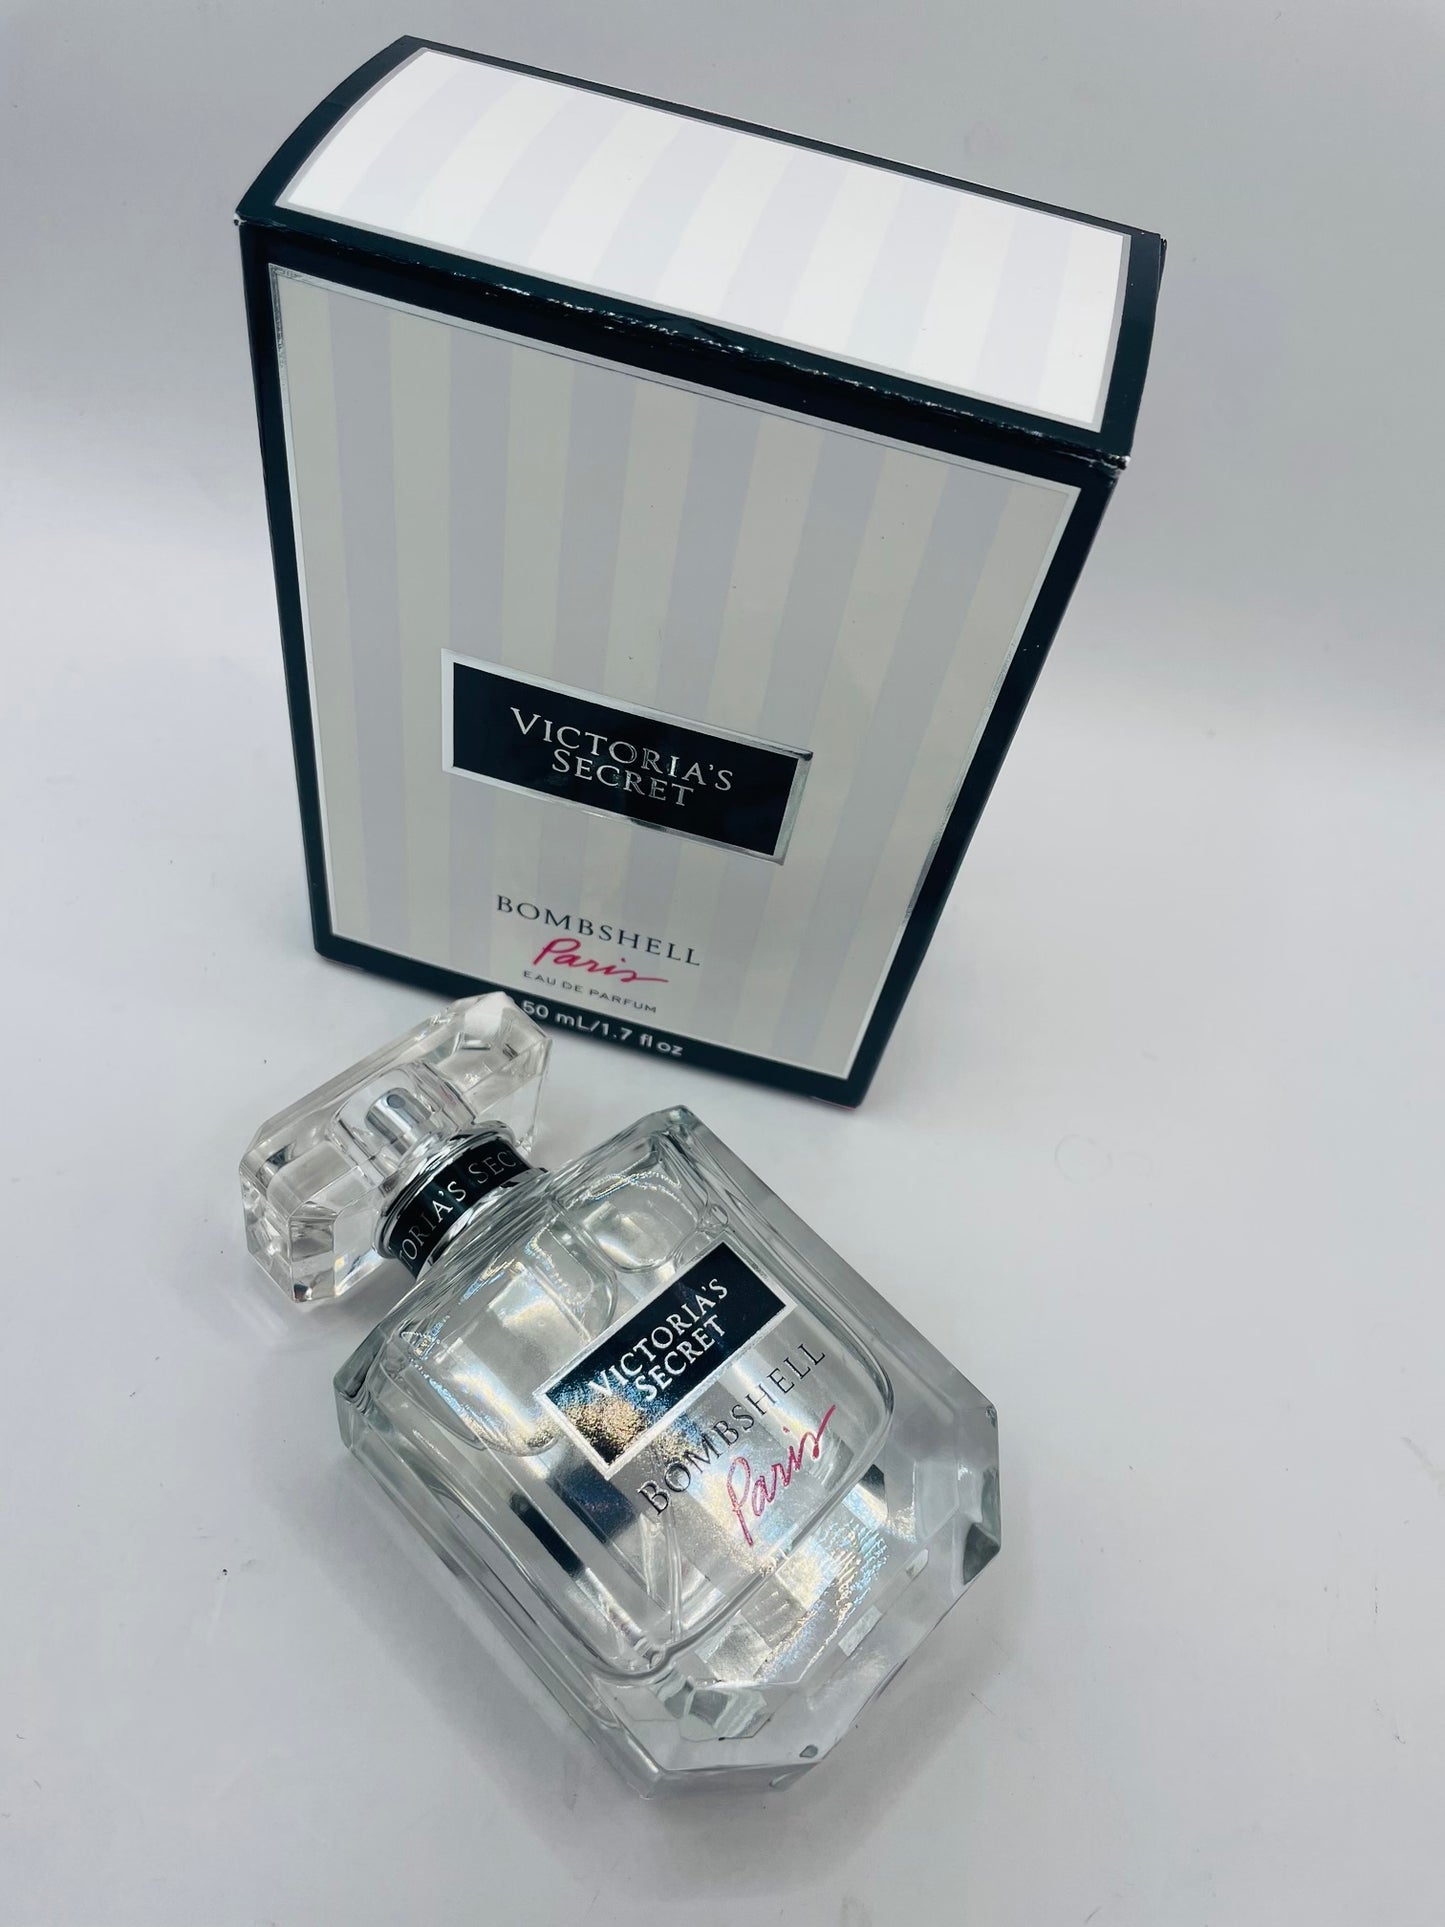 Victoria secret bombshell Paris perfum 50 ml